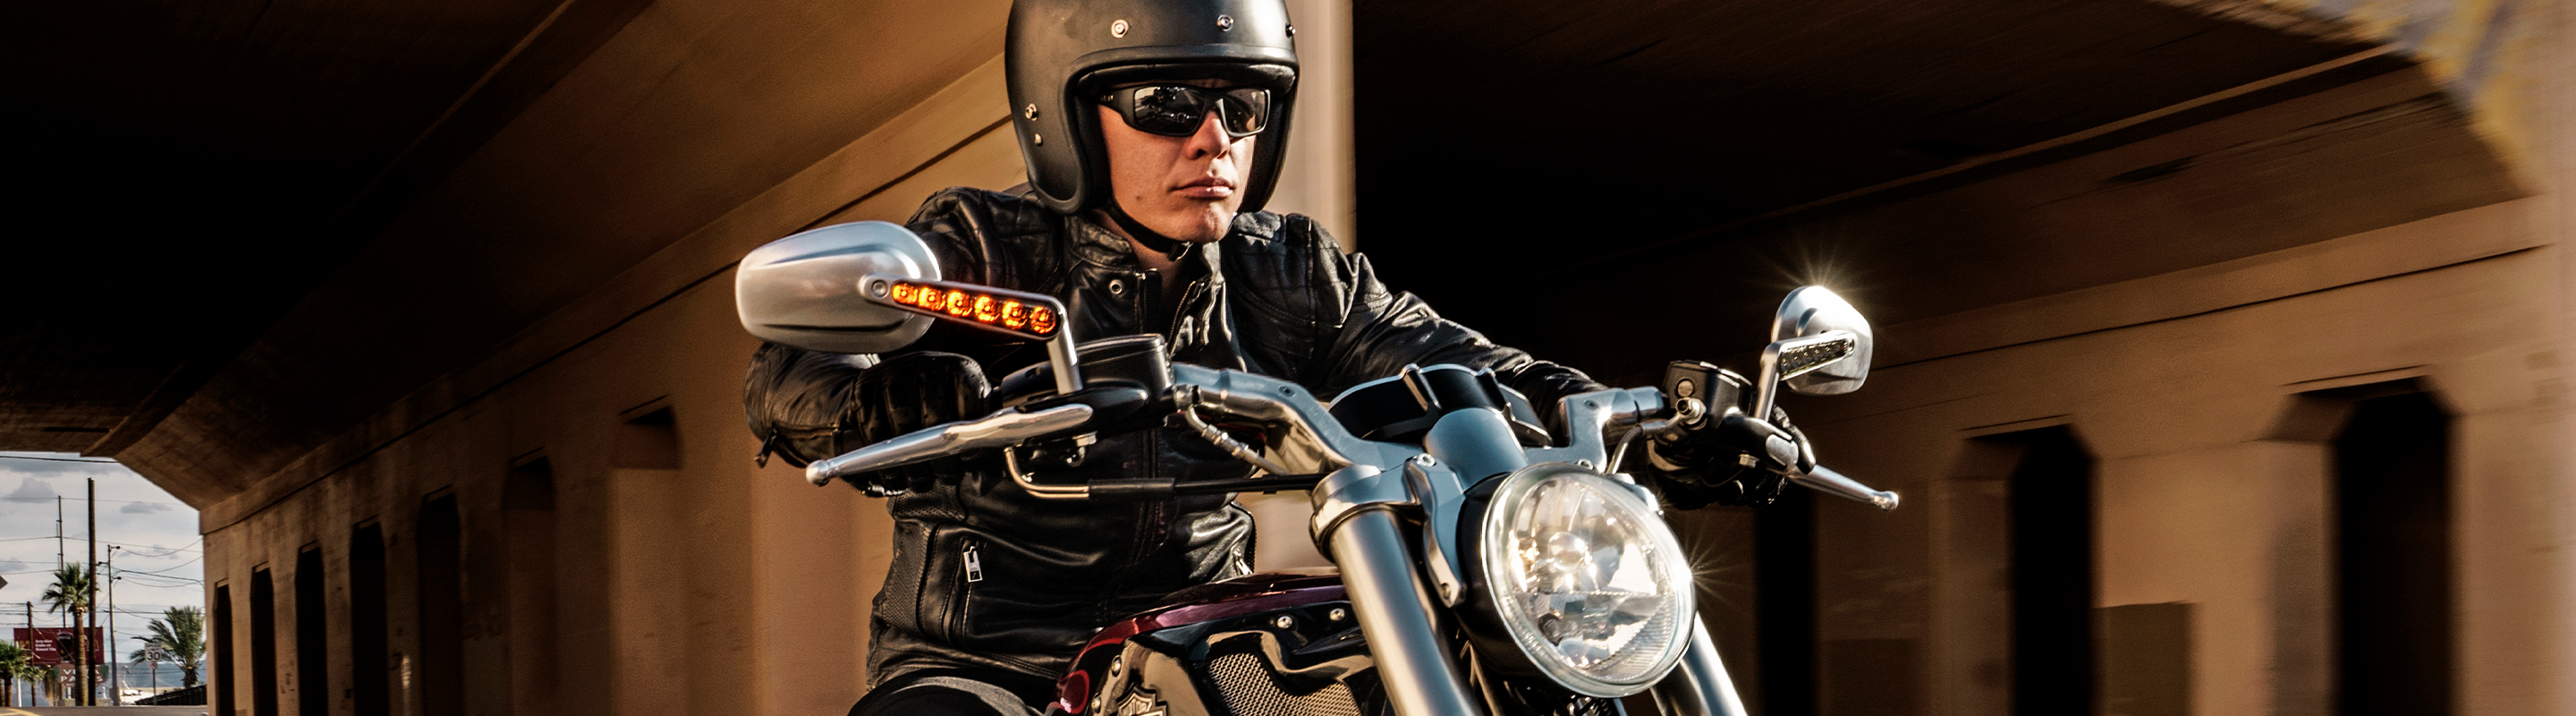 man wearing motorcycle sunglasses on motorcycle